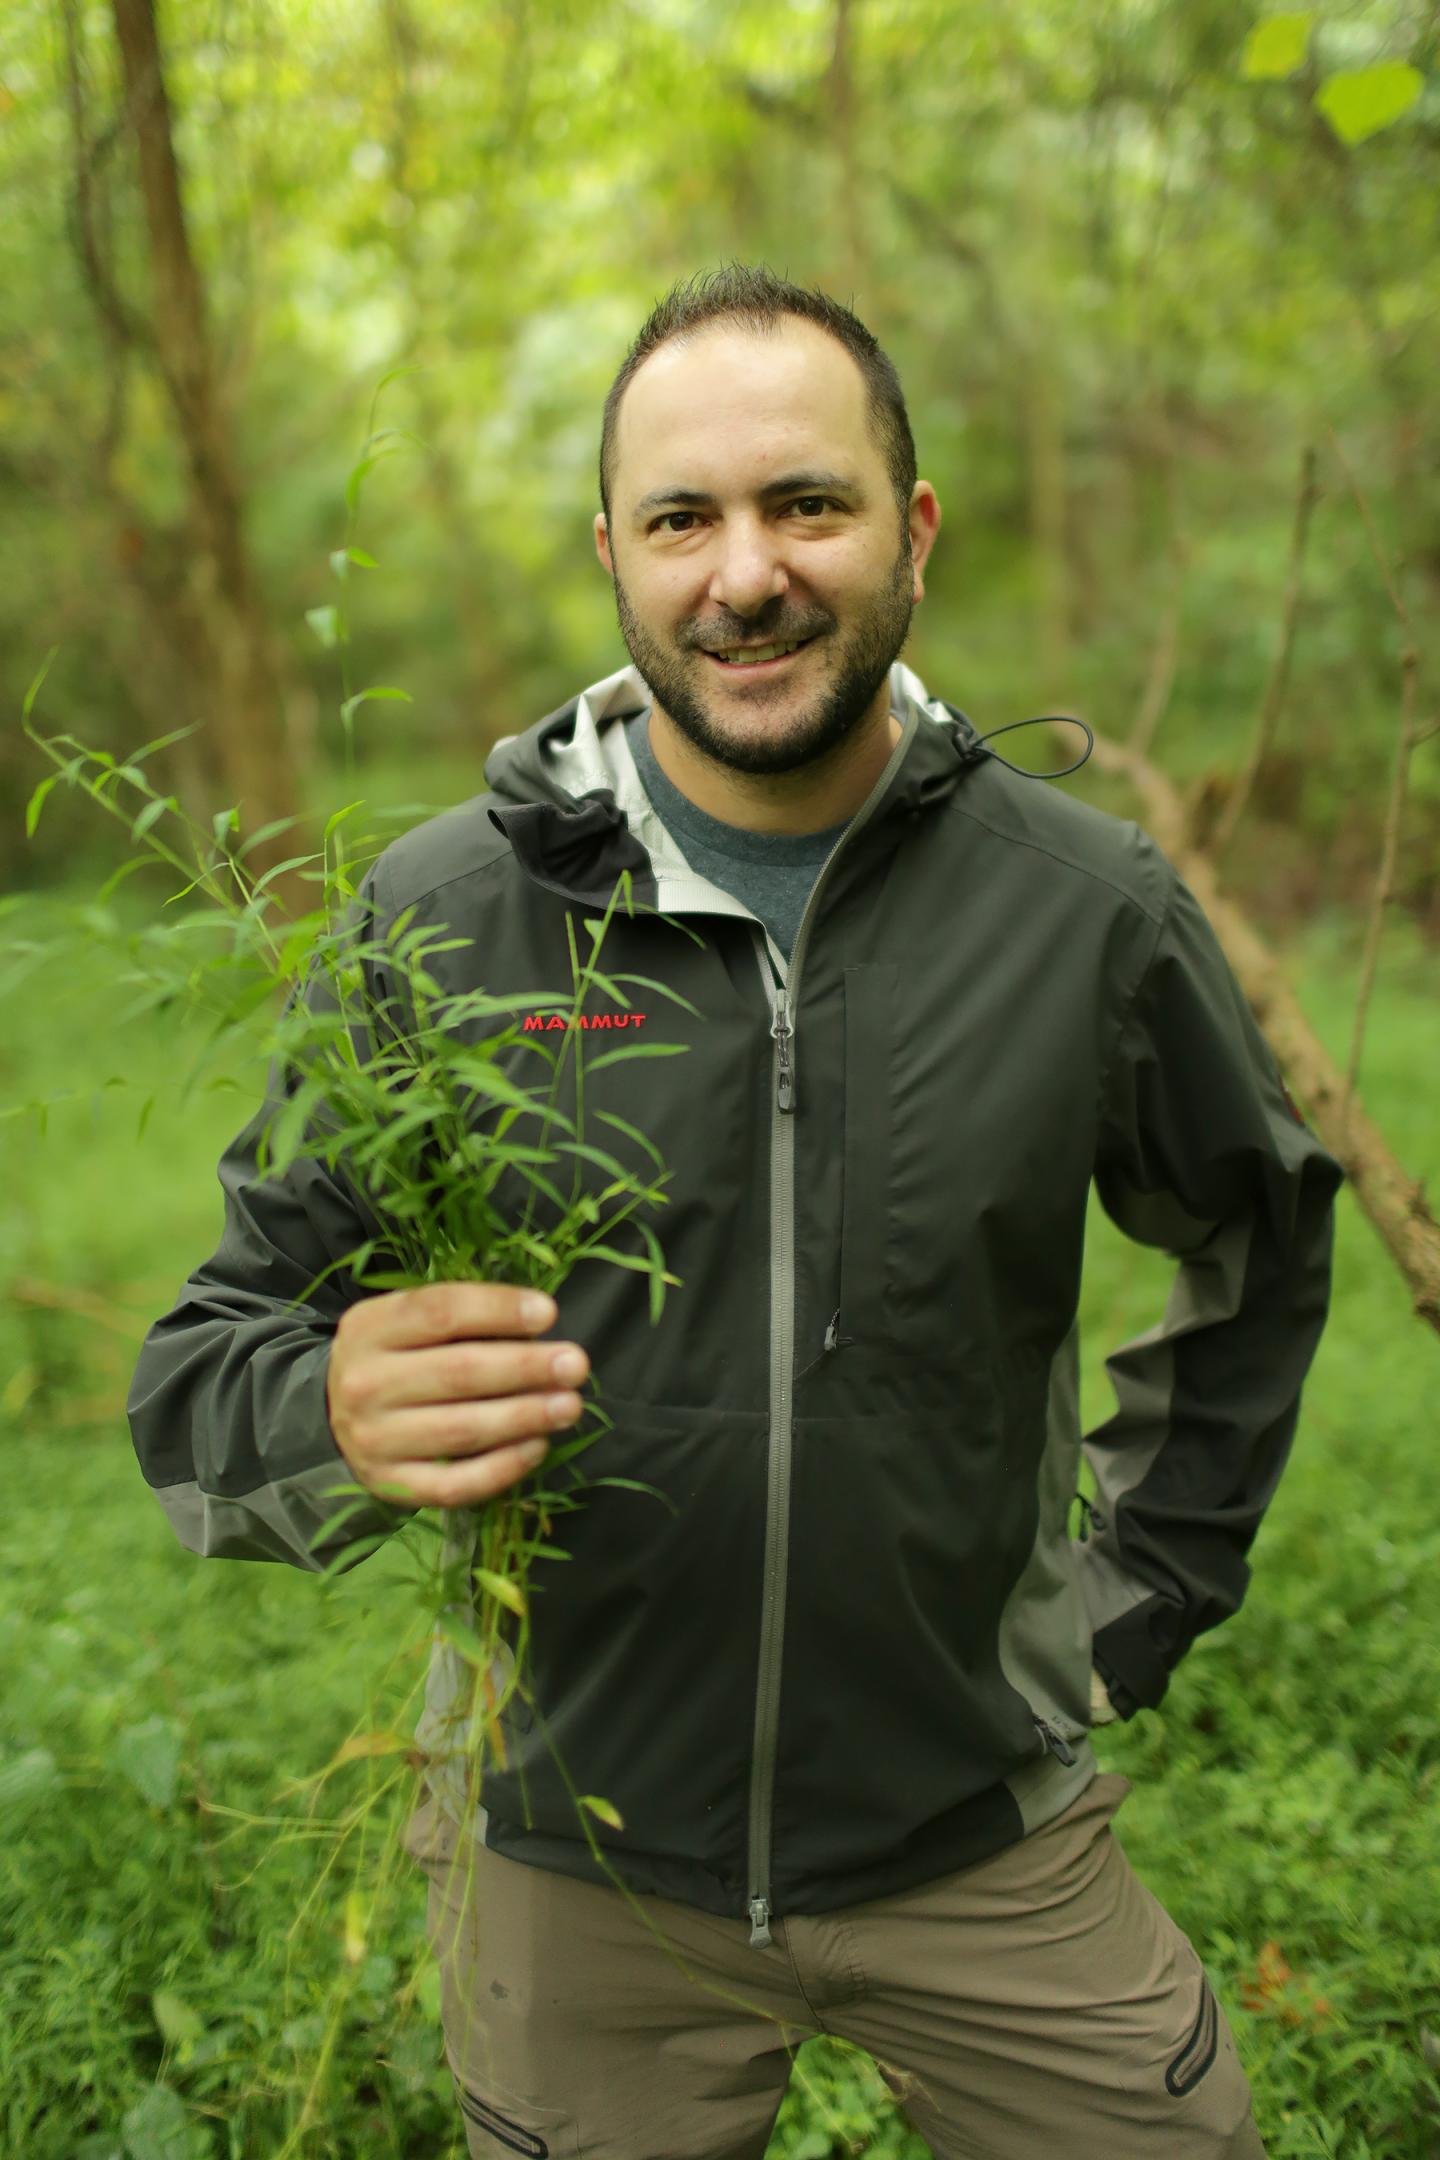 WVU Plant Biologist Craig Barrett Holds An Example of the Invasive Species Japanese Stiltgrass